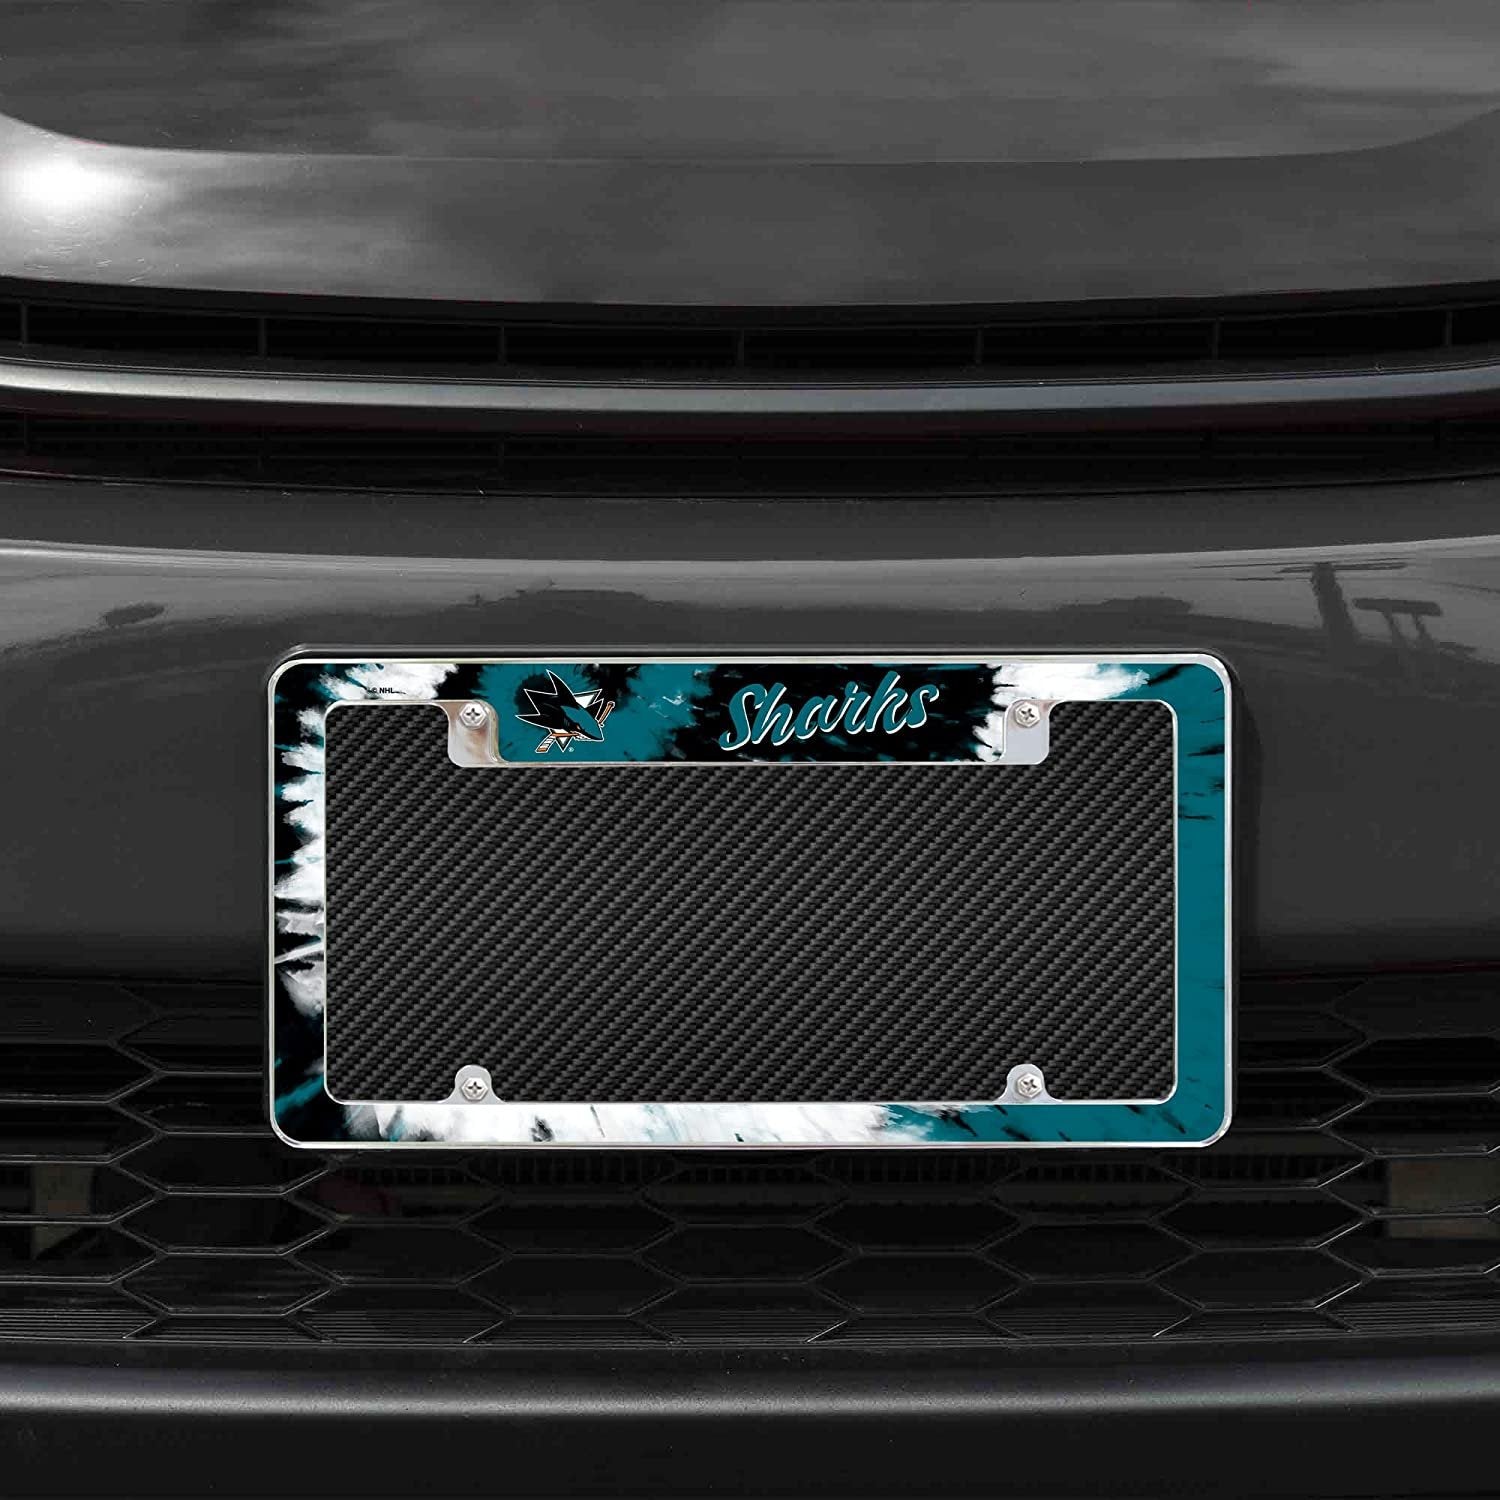 San Jose Sharks Metal License Plate Frame Chrome Tag Cover Tie Dye Design 6x12 Inch